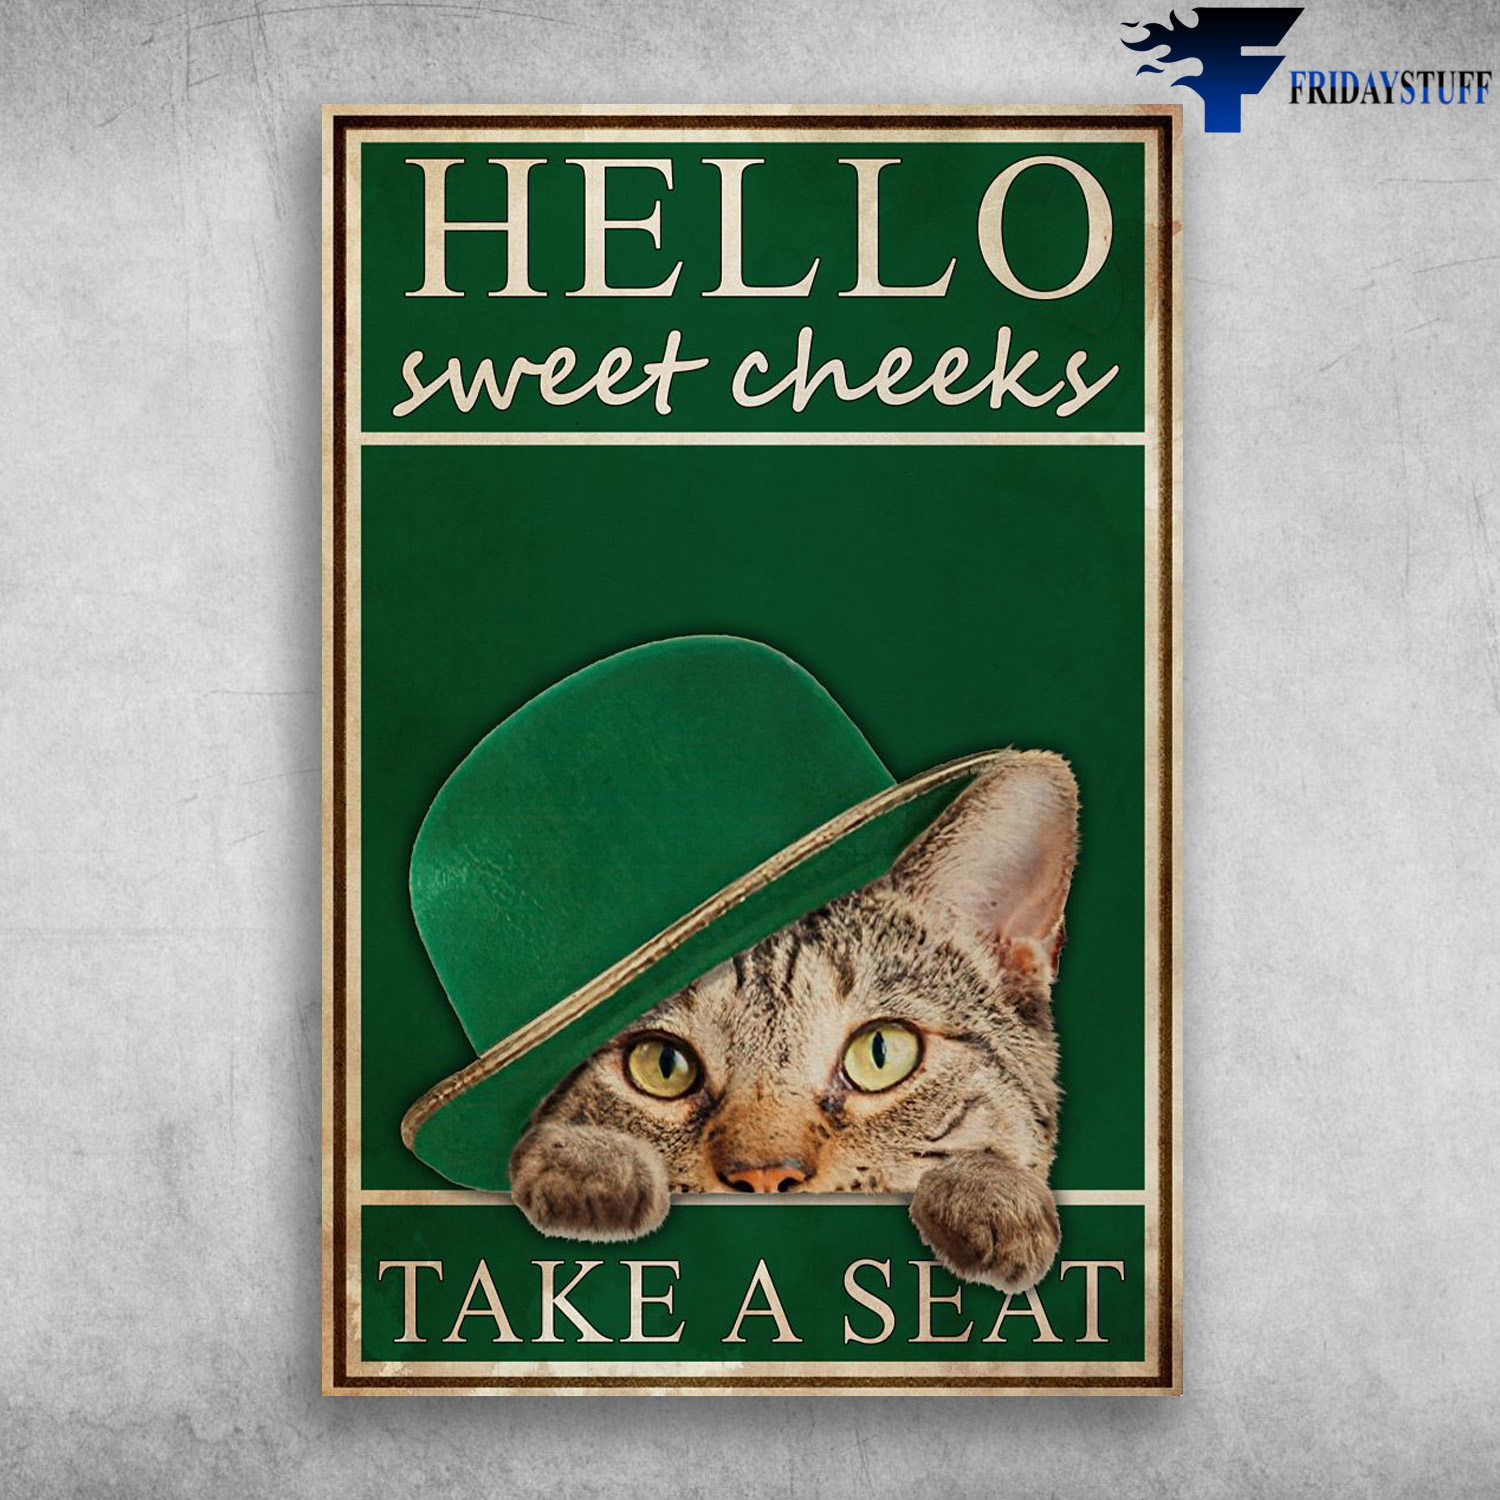 Irish Tabby Cat - Hello Sweet Cheeks, Take A Seat, Saint Patrick’s Day, irish, Patriots’ Day